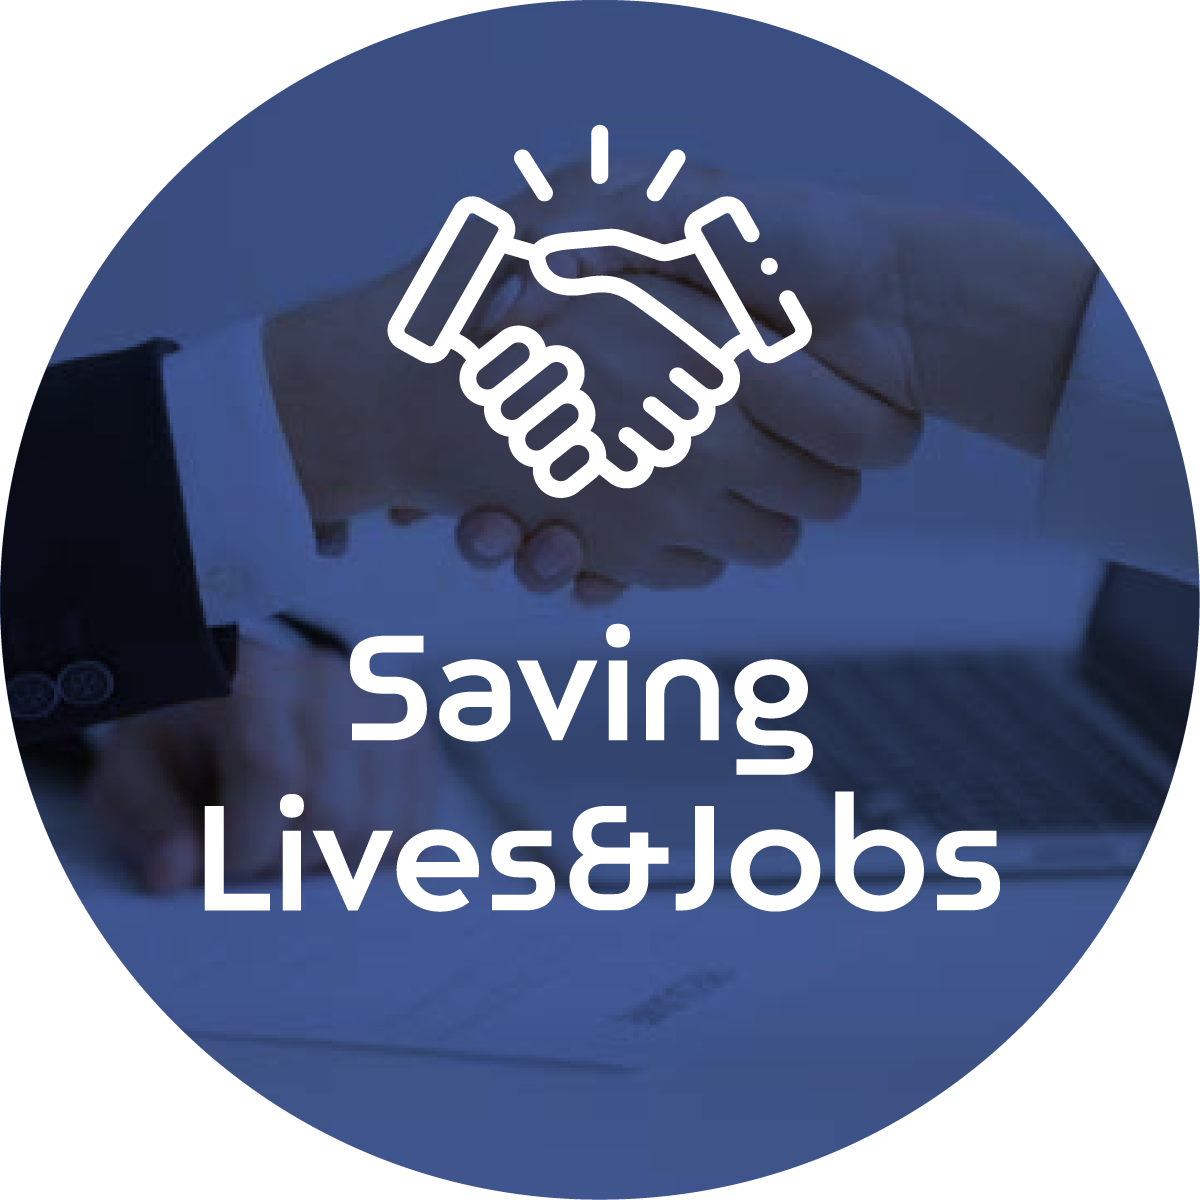 Saving Lives&Jobs